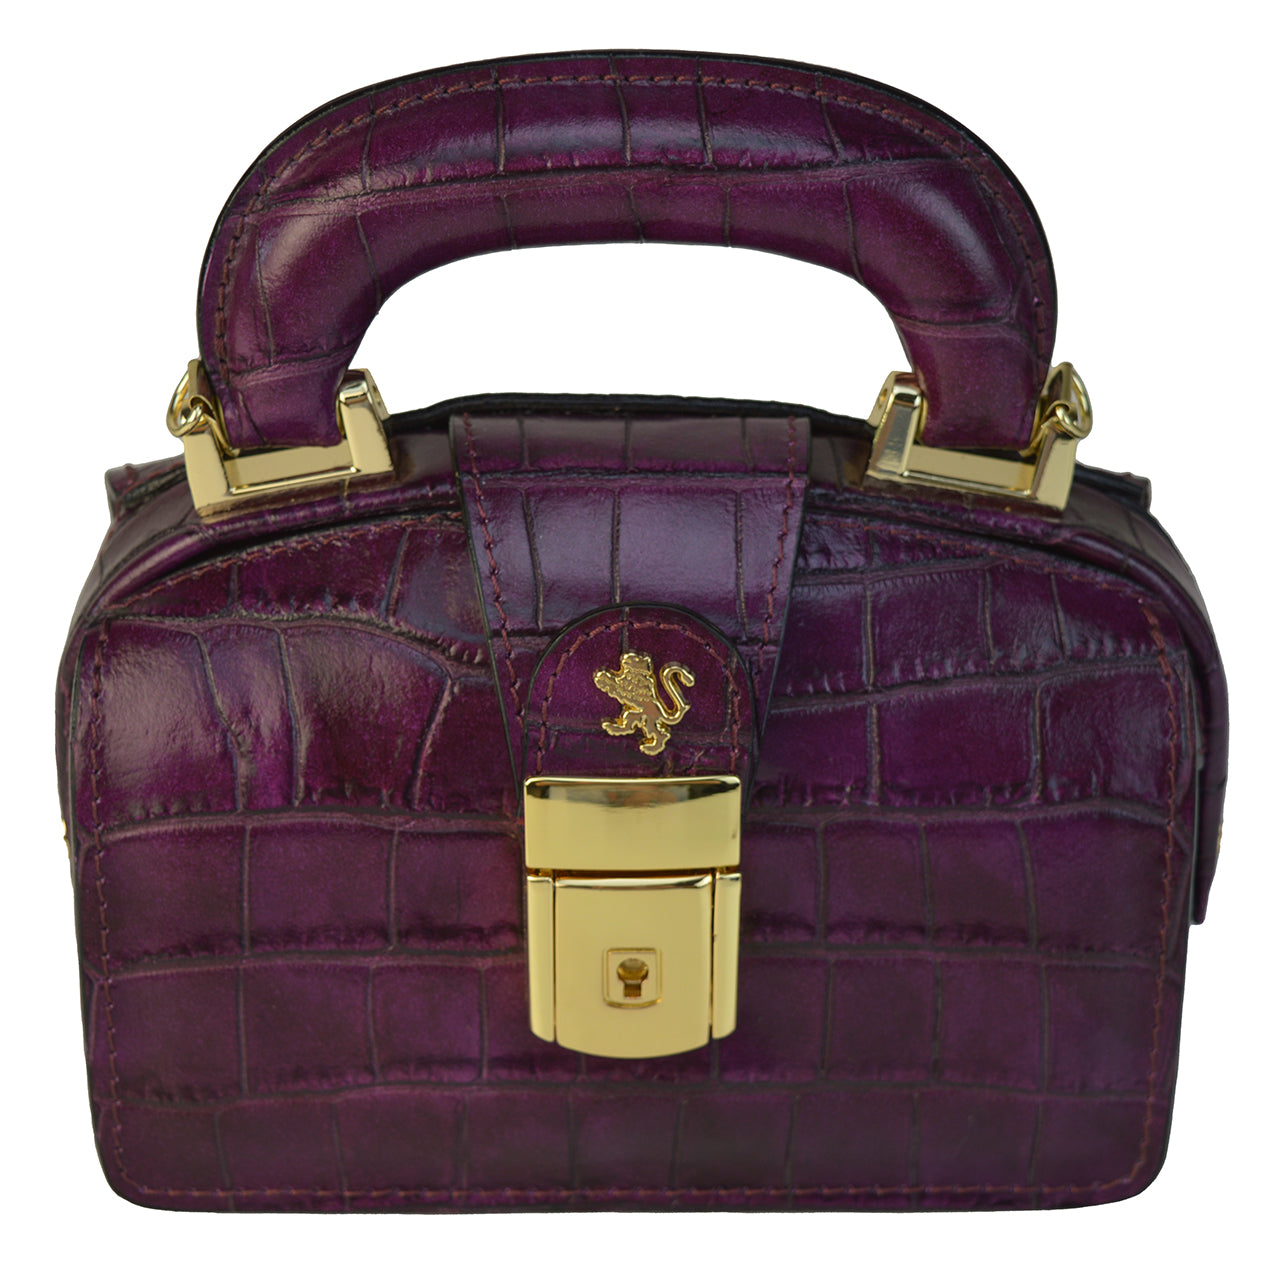 Pratesi Lady 18 Brunelleschi in genuine Italian leather - Croco Embossed Leather Violet